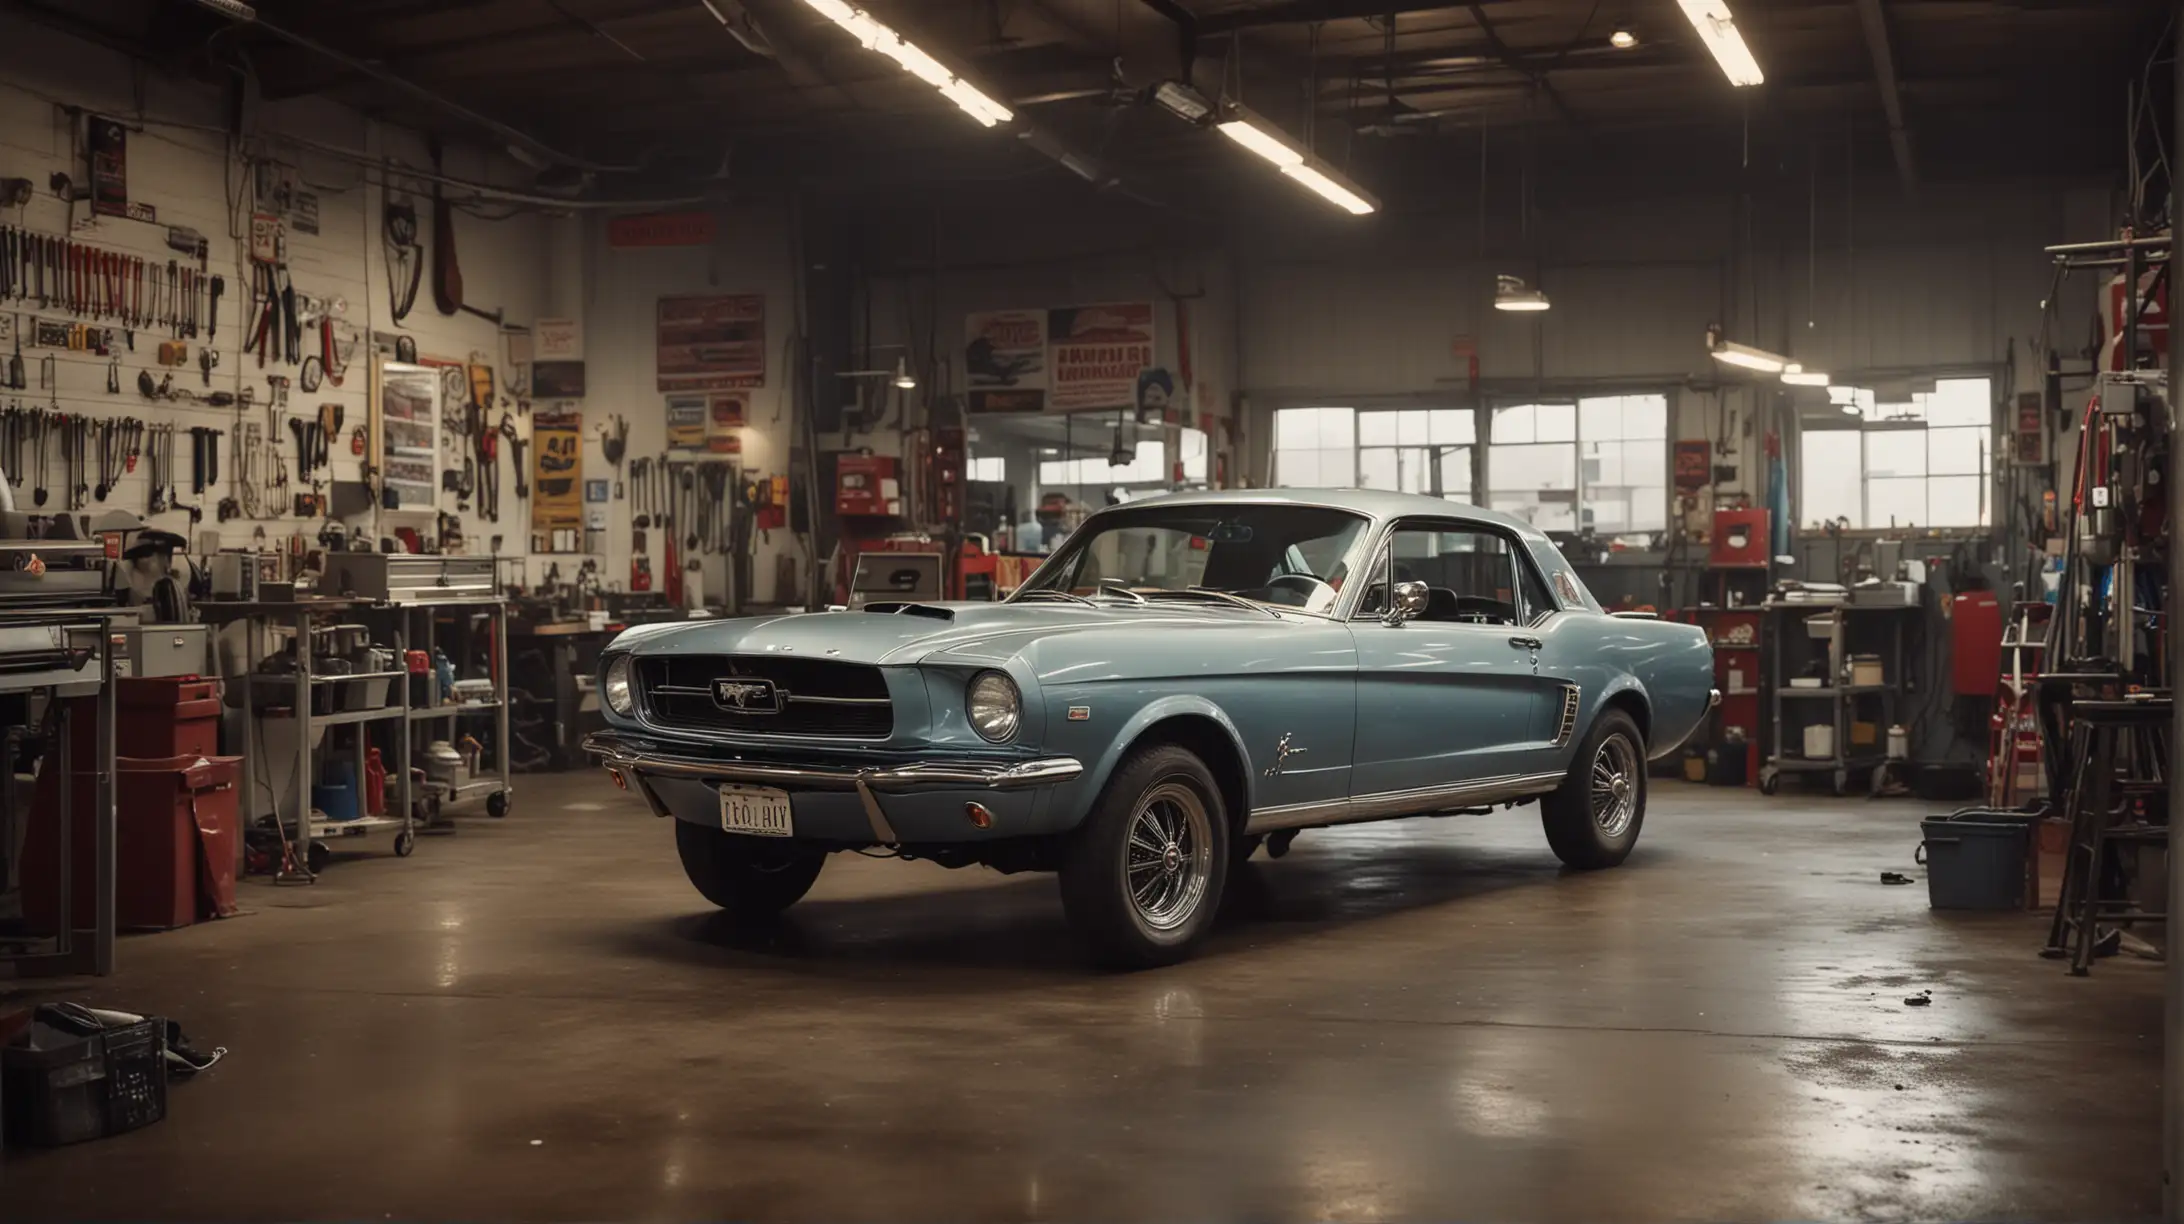 Vintage Mustang in Chromethemed Car Repair Shop